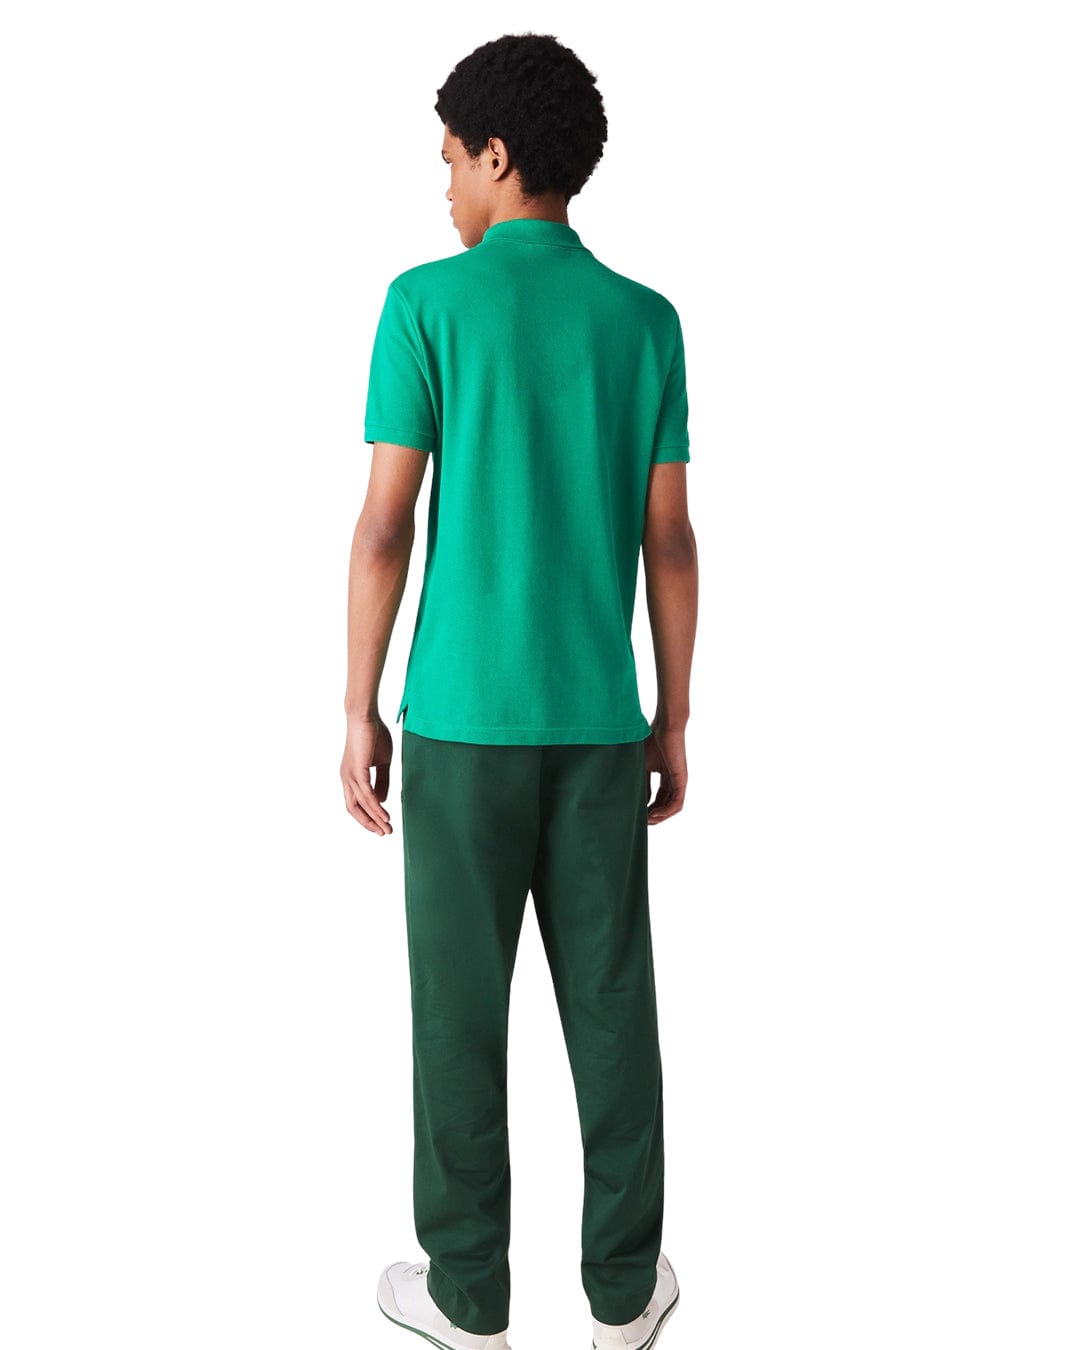 Lacoste Polo Shirts Lacoste Slim Fit Petit Pique Green Polo Shirt